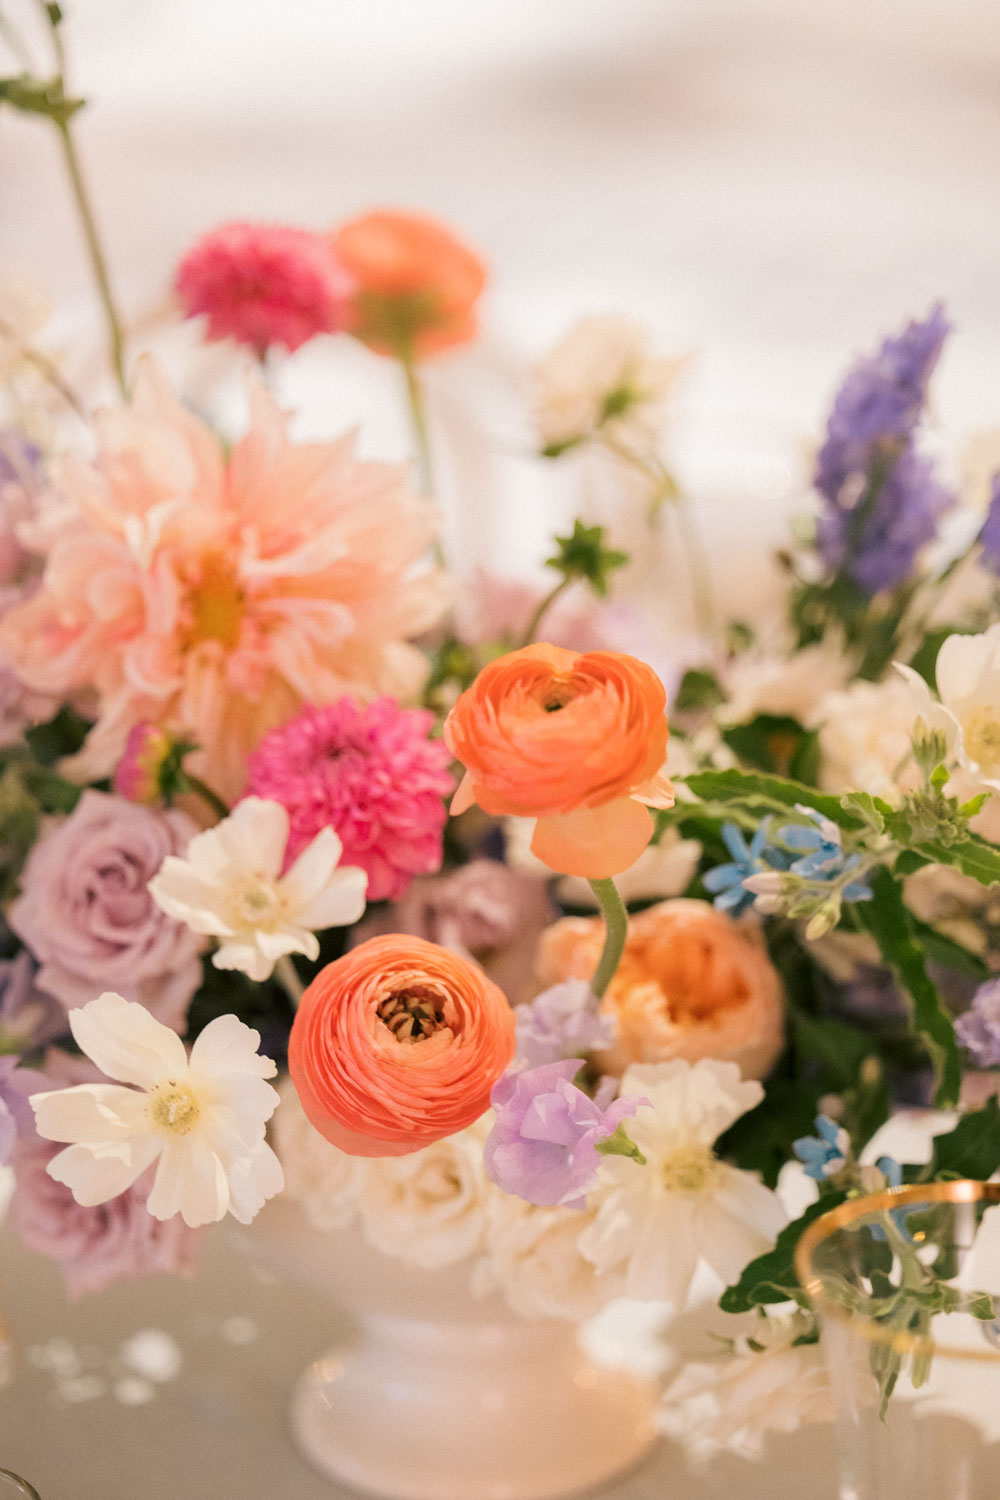 A summery, colorful wedding reception floral arrangement.